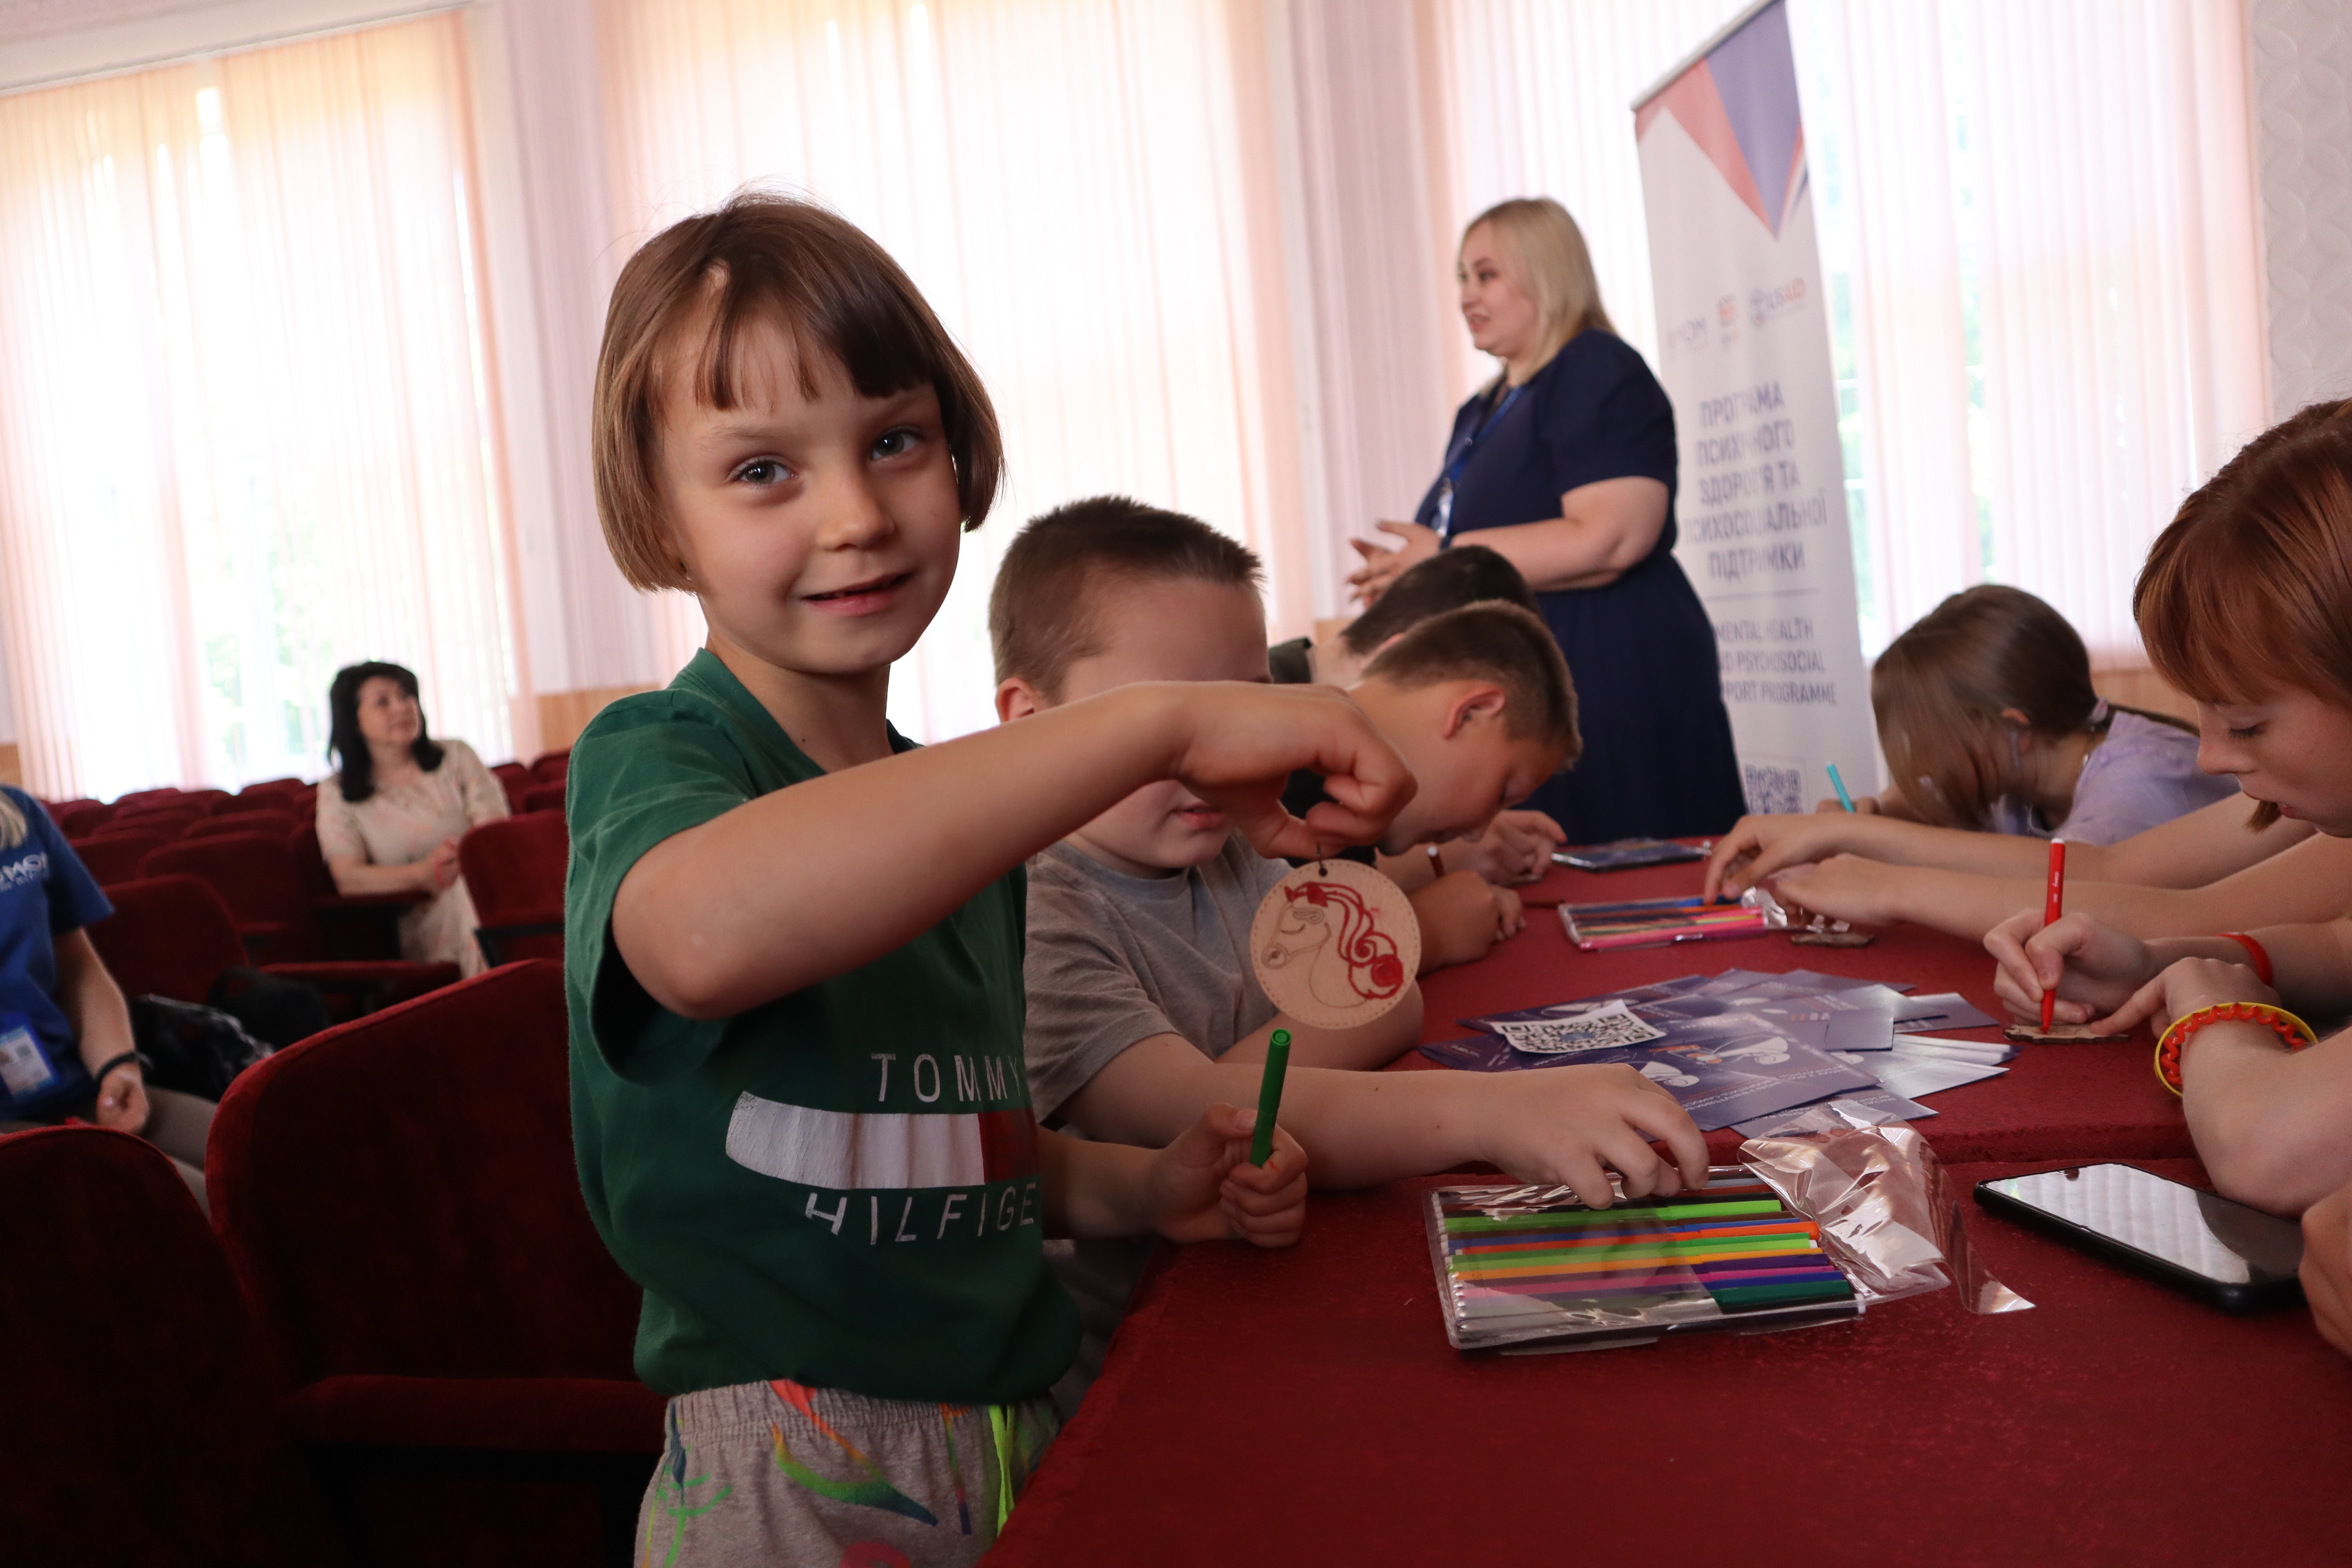 IOM distributed tablets among displaced children in Vinnytsia region